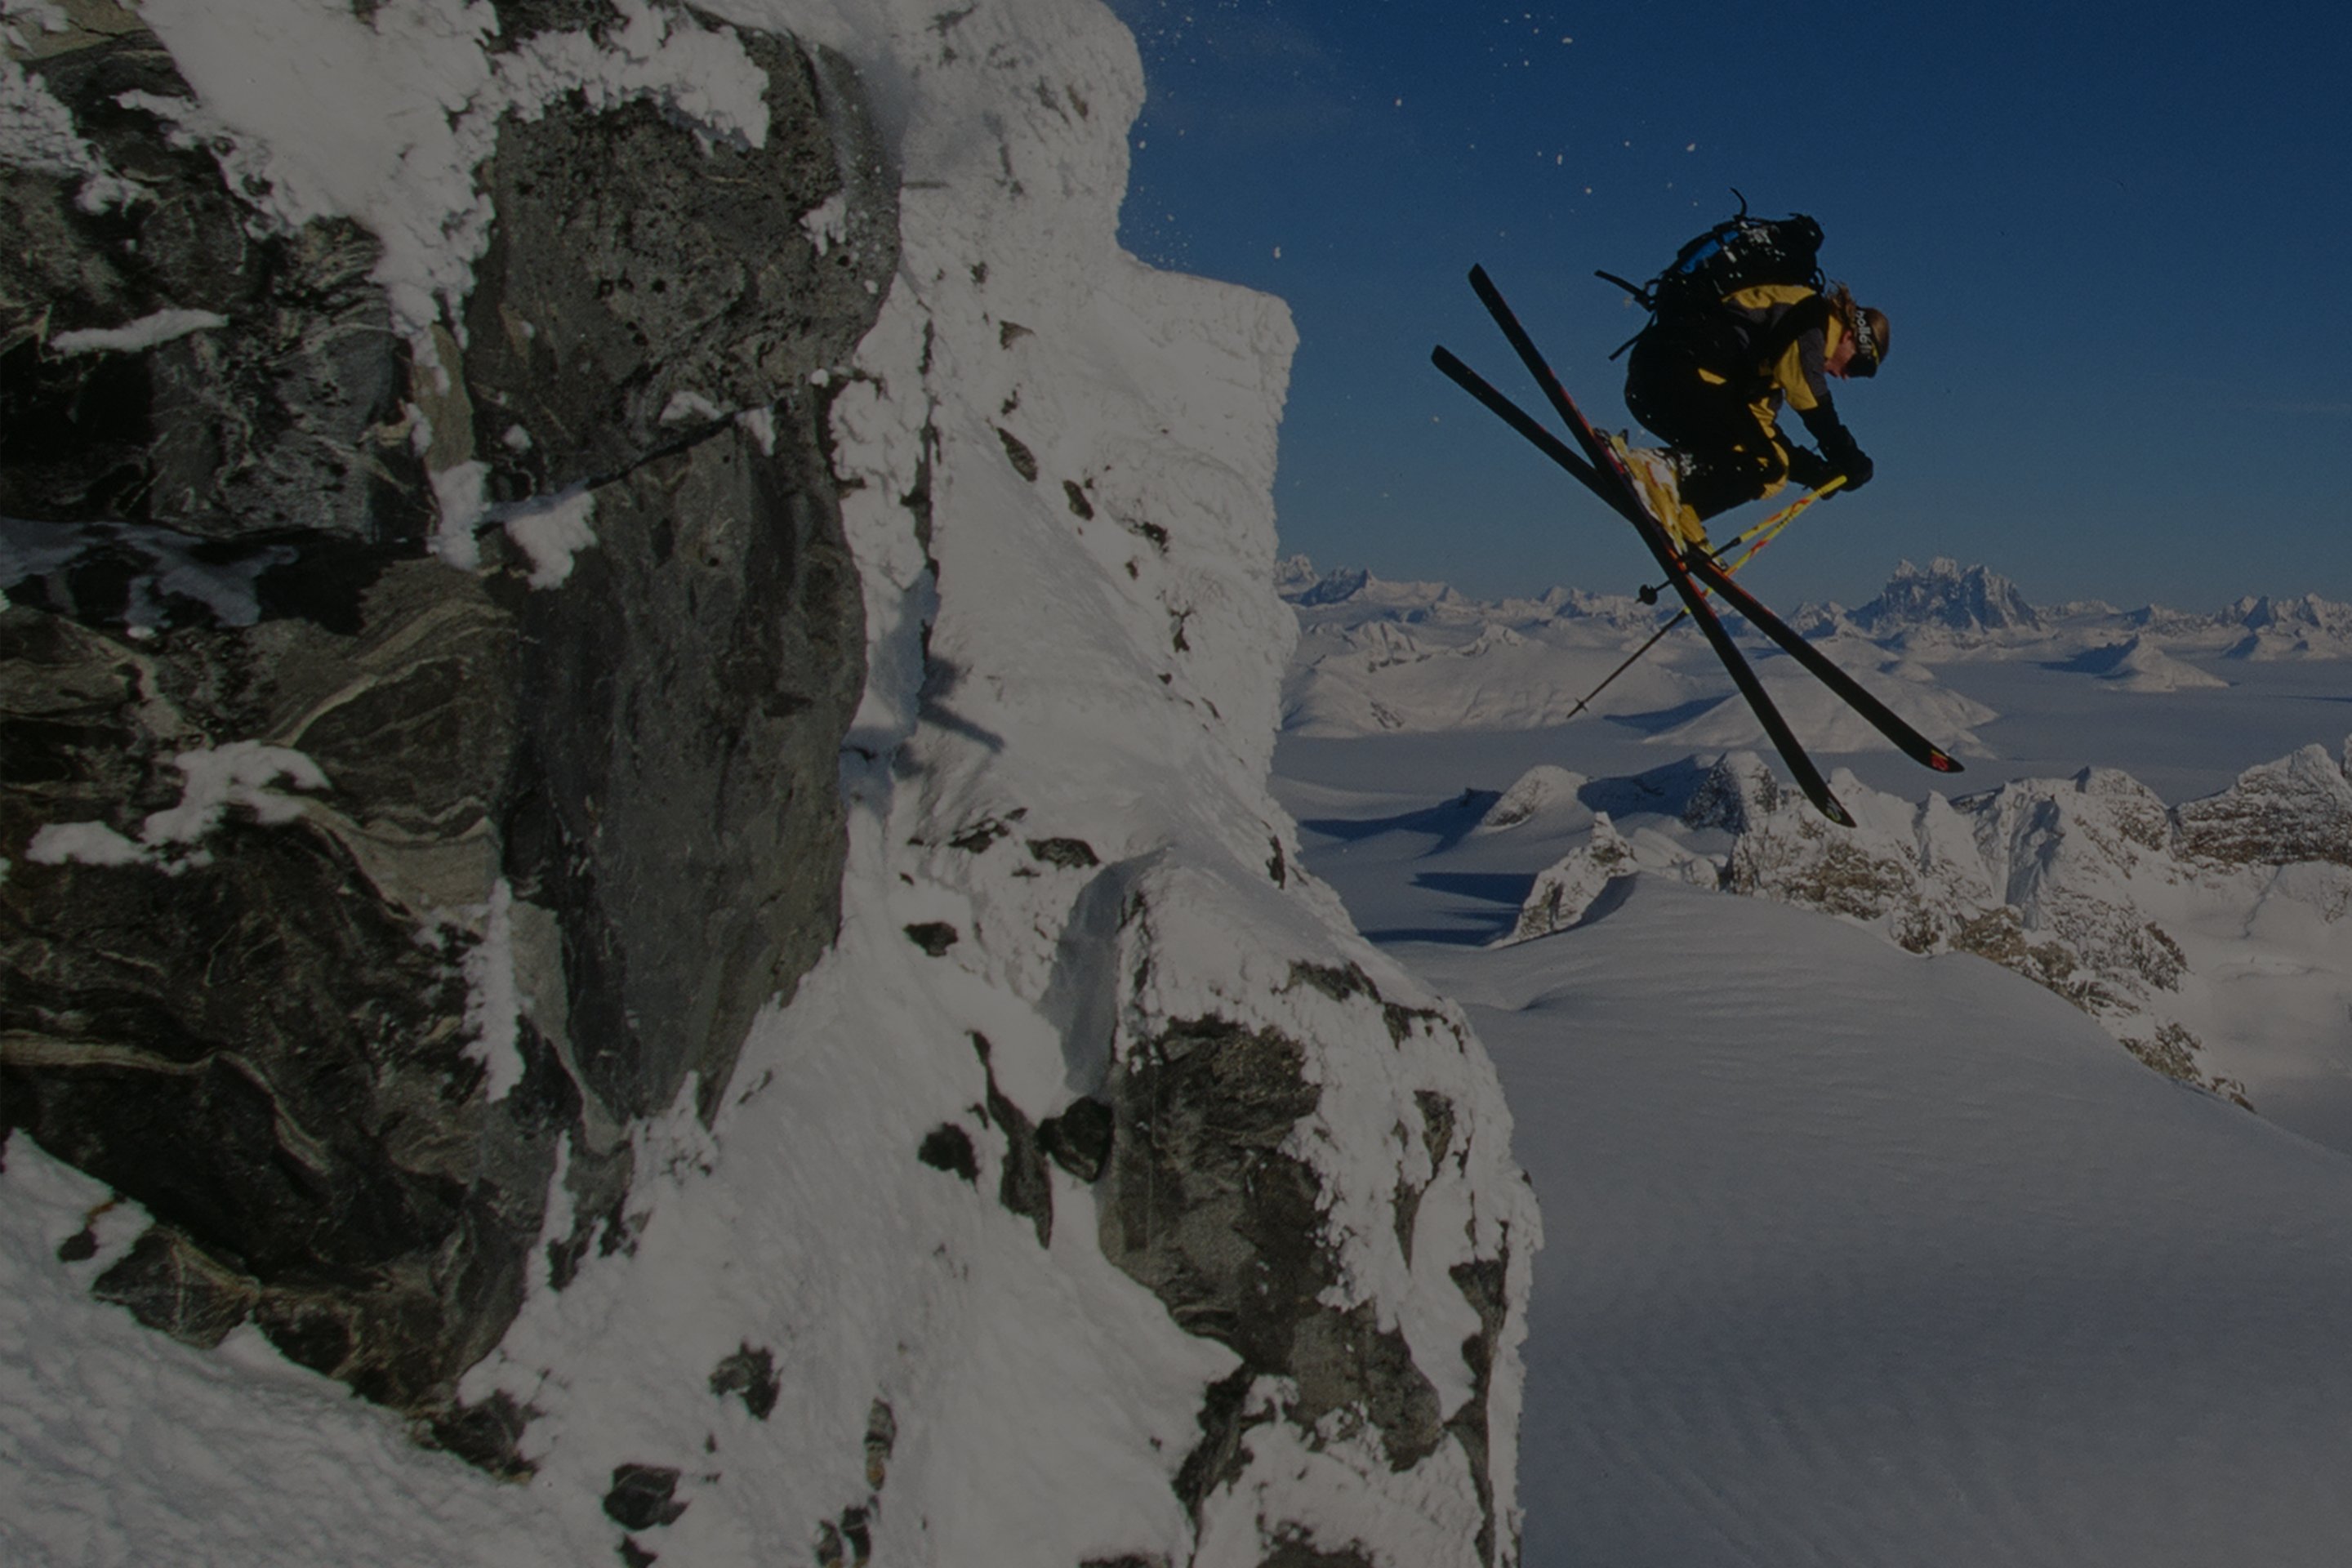 A skier makes a daring jump off a high alpine ledge.